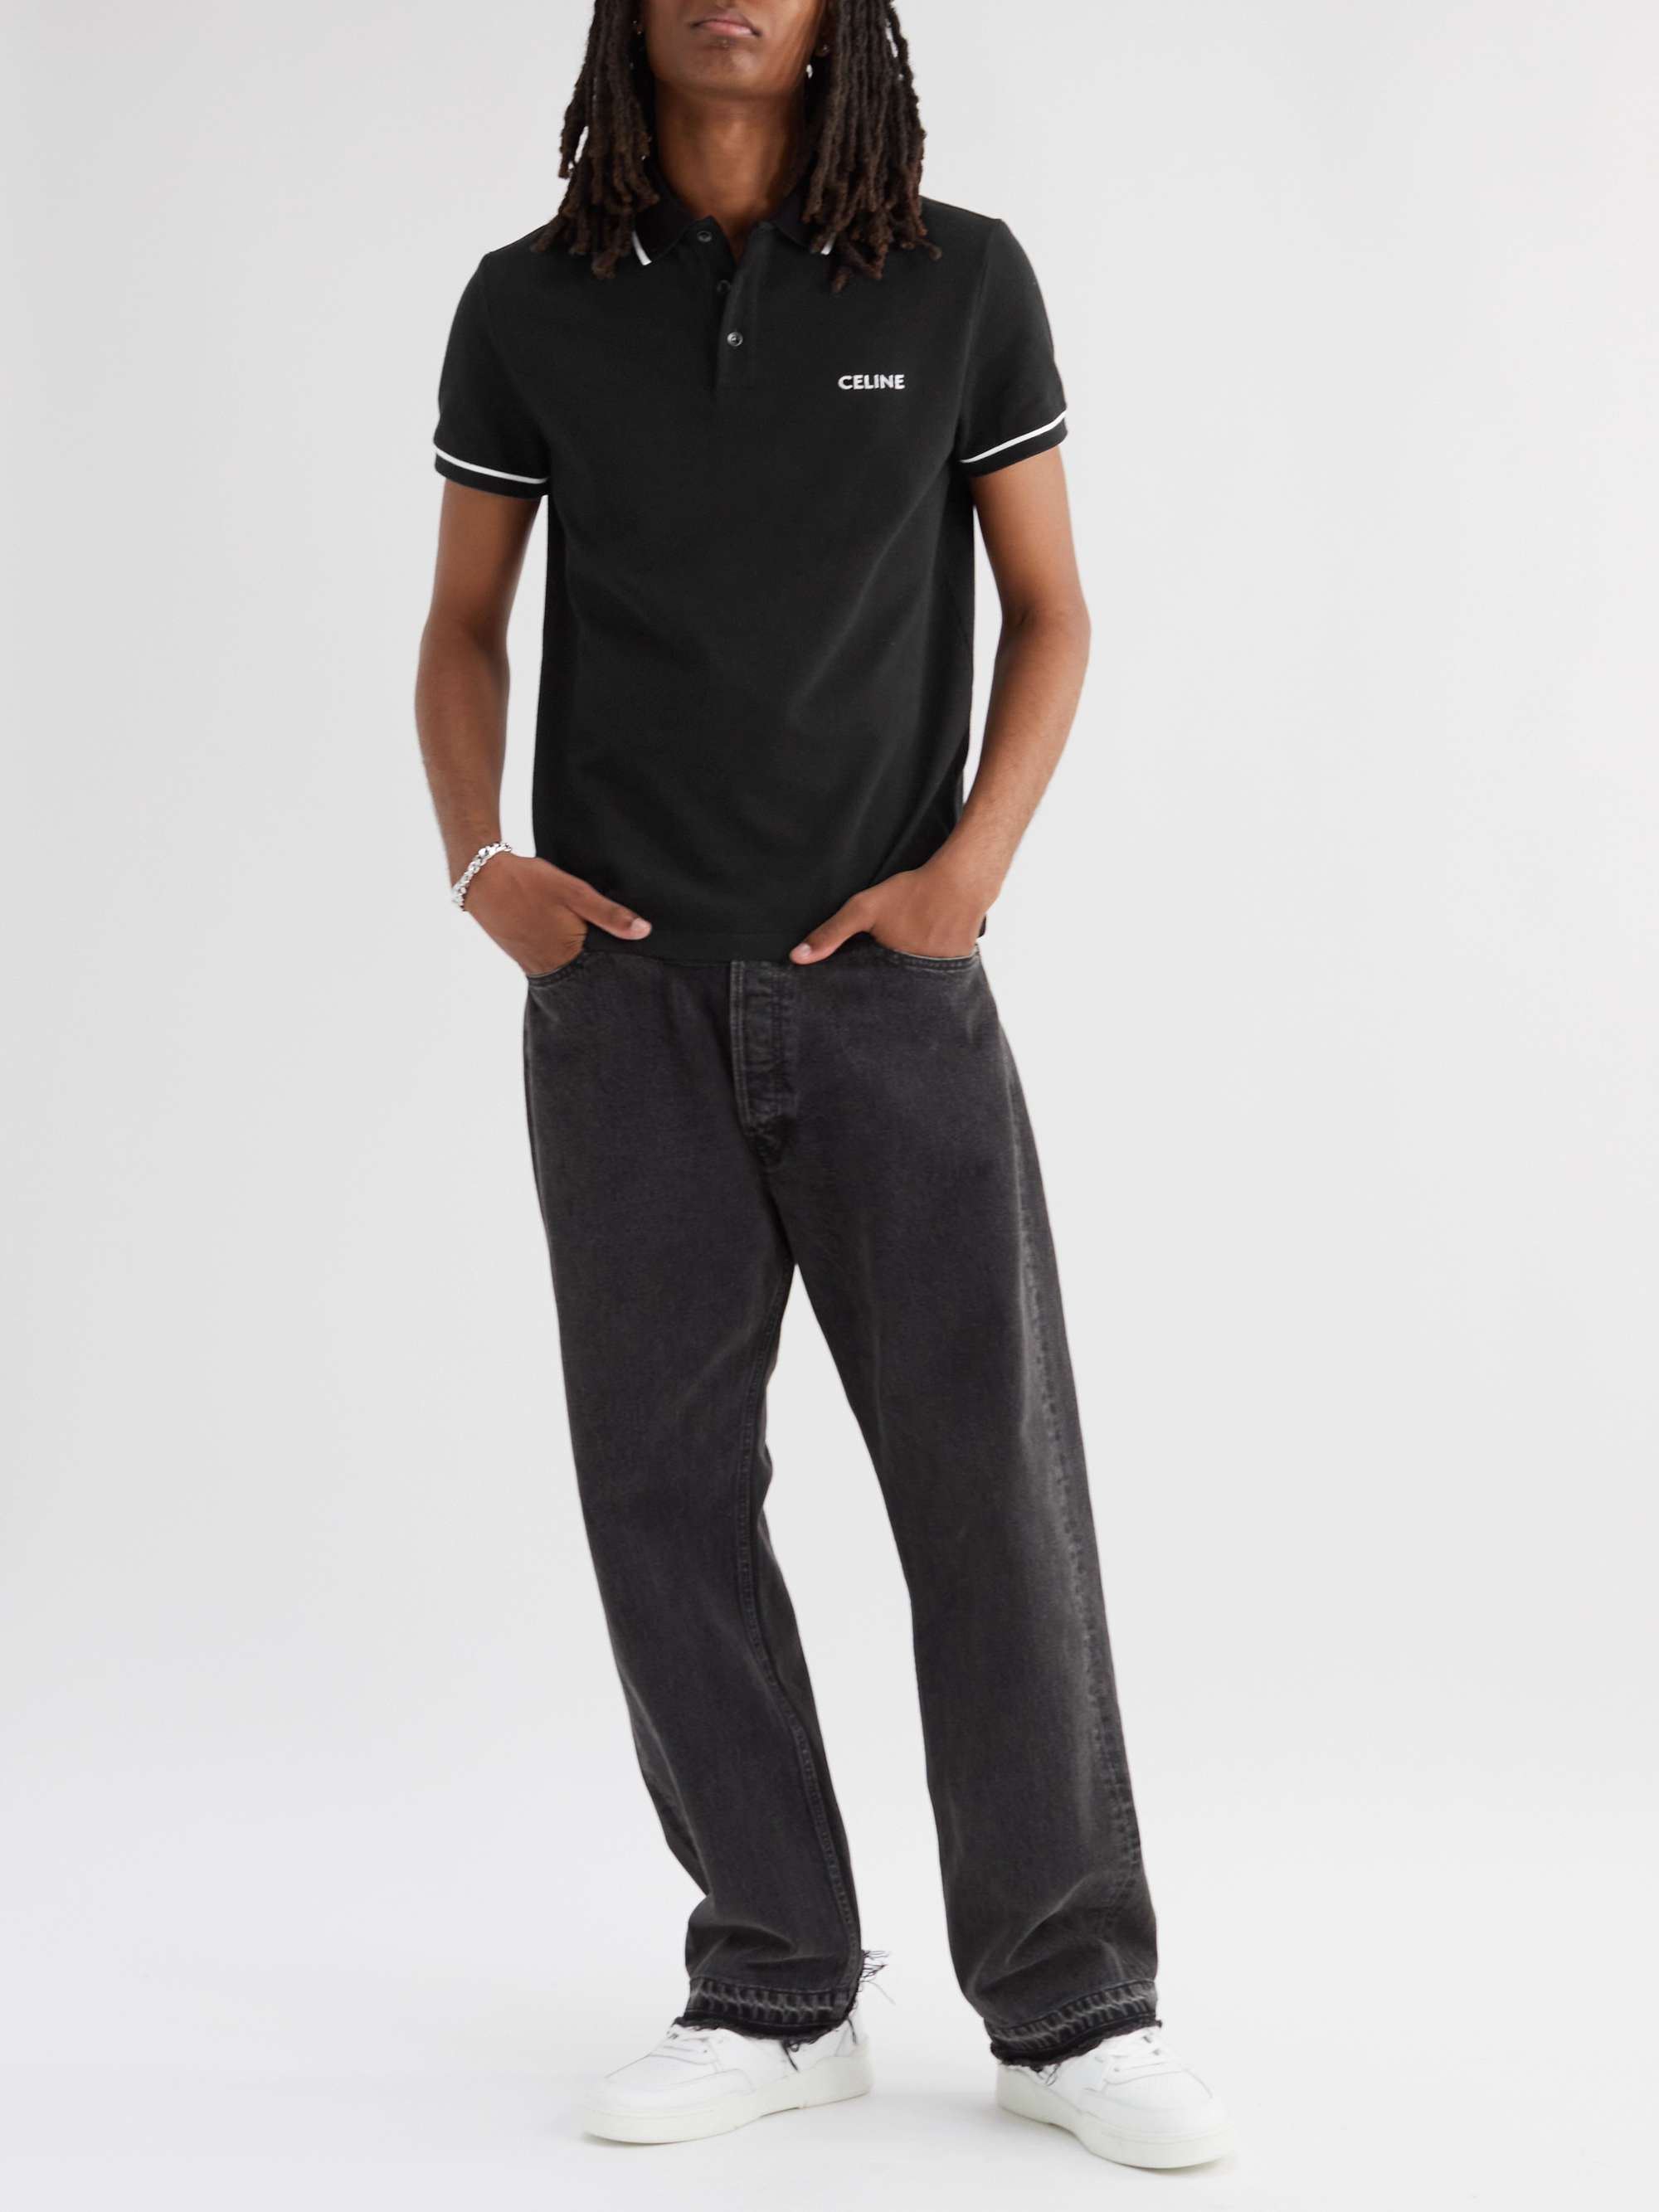 Black Logo-Embroidered Cotton-Piqué Polo Shirt | CELINE HOMME | MR PORTER